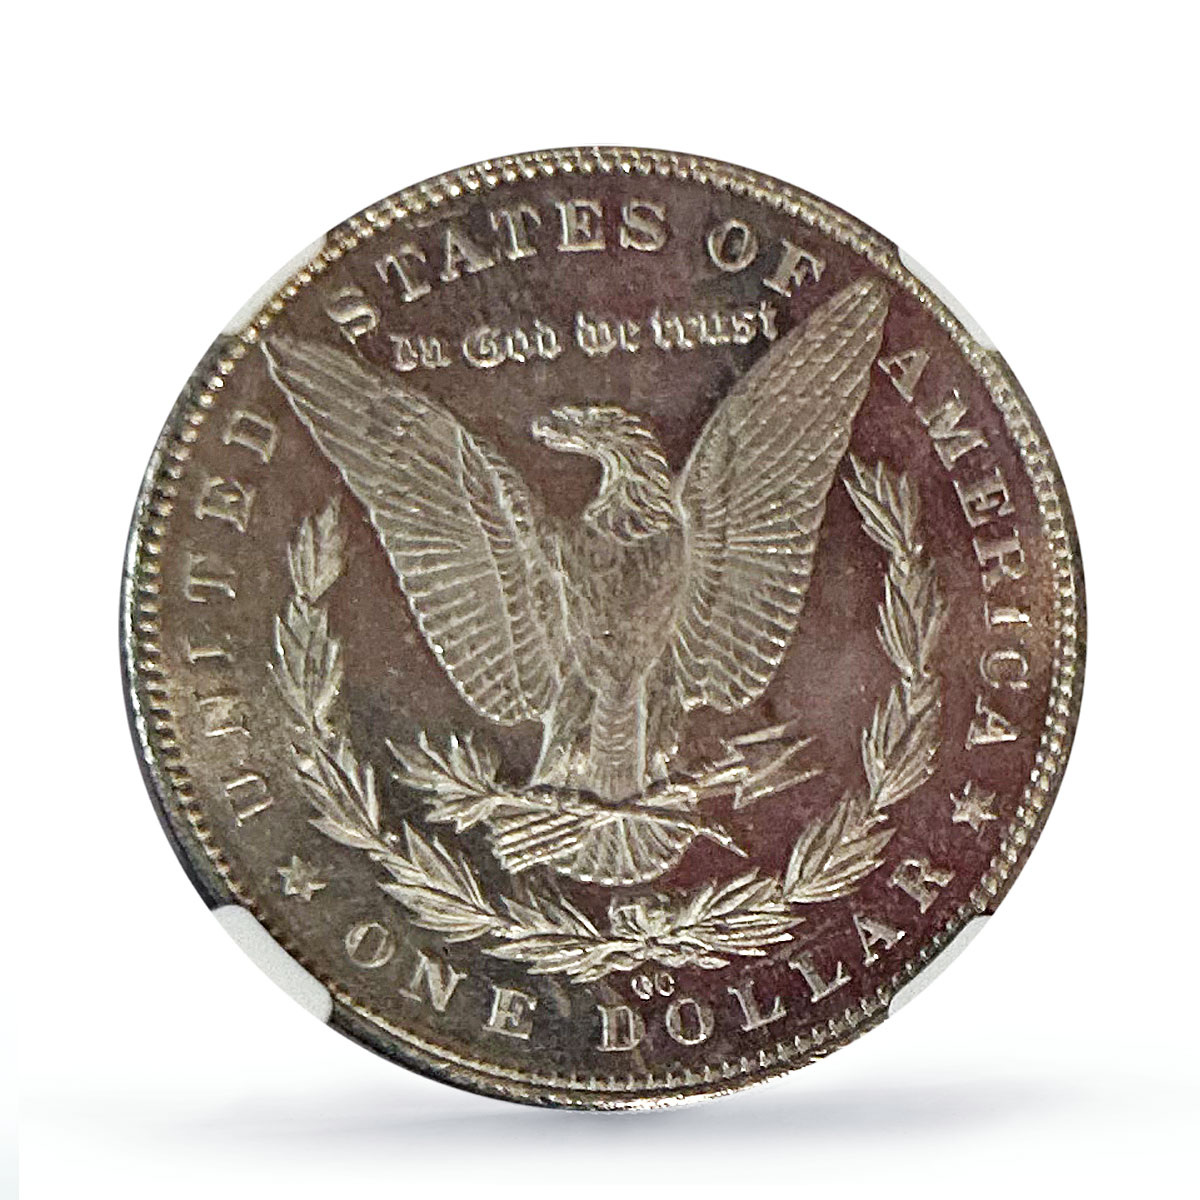 United States 1 dollar Liberty Morgan Dollar CC KM-110 MS61 NGC silver coin 1891